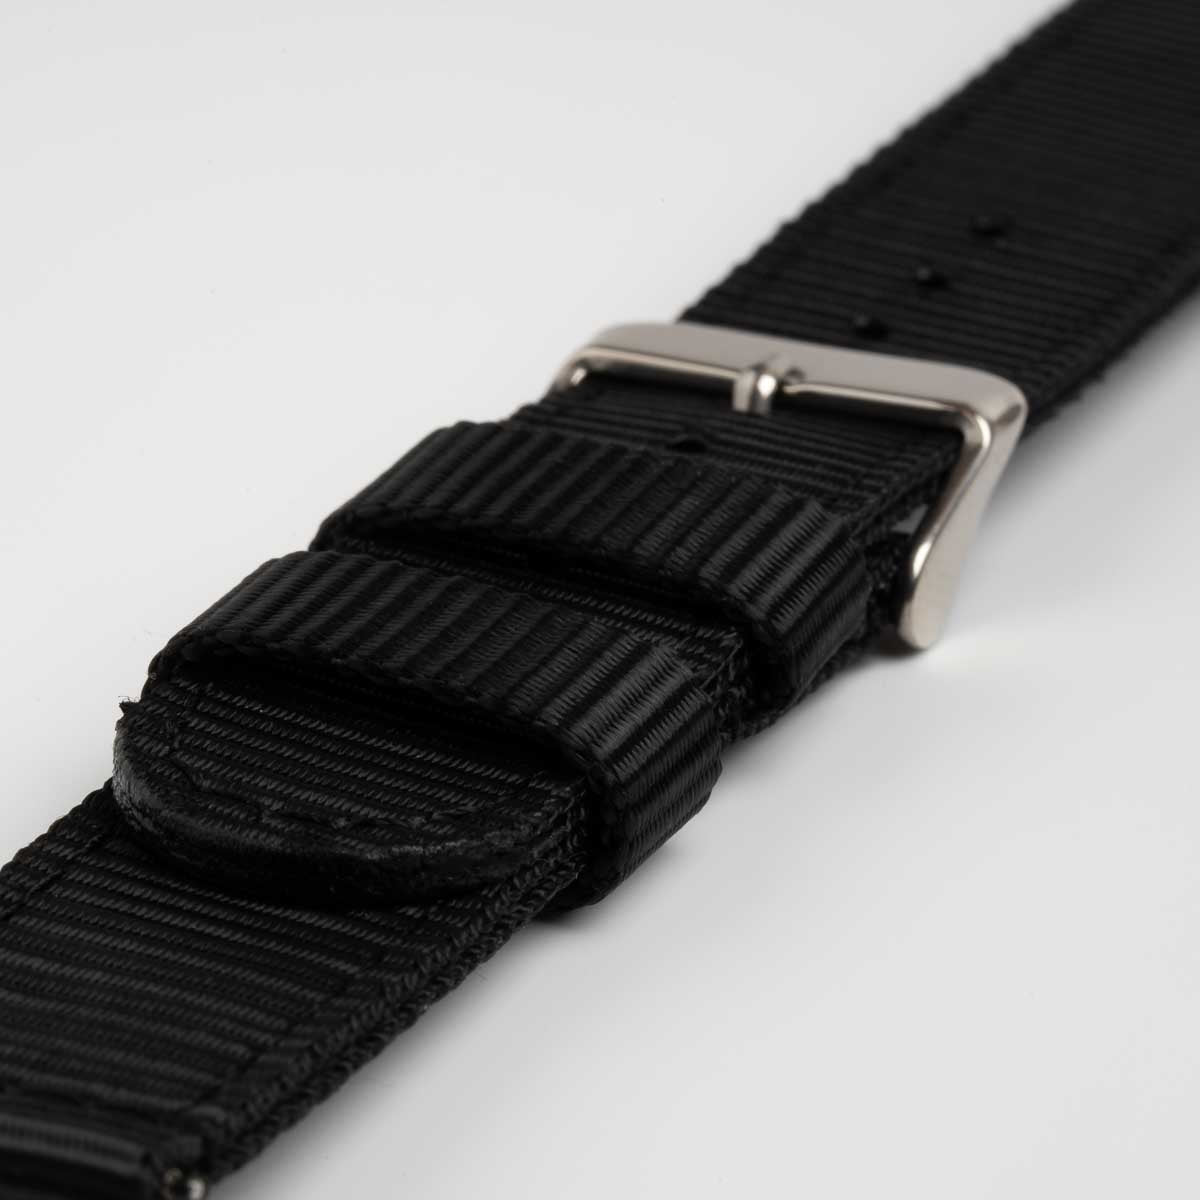 Nylon Quick Release Black Watch Strap